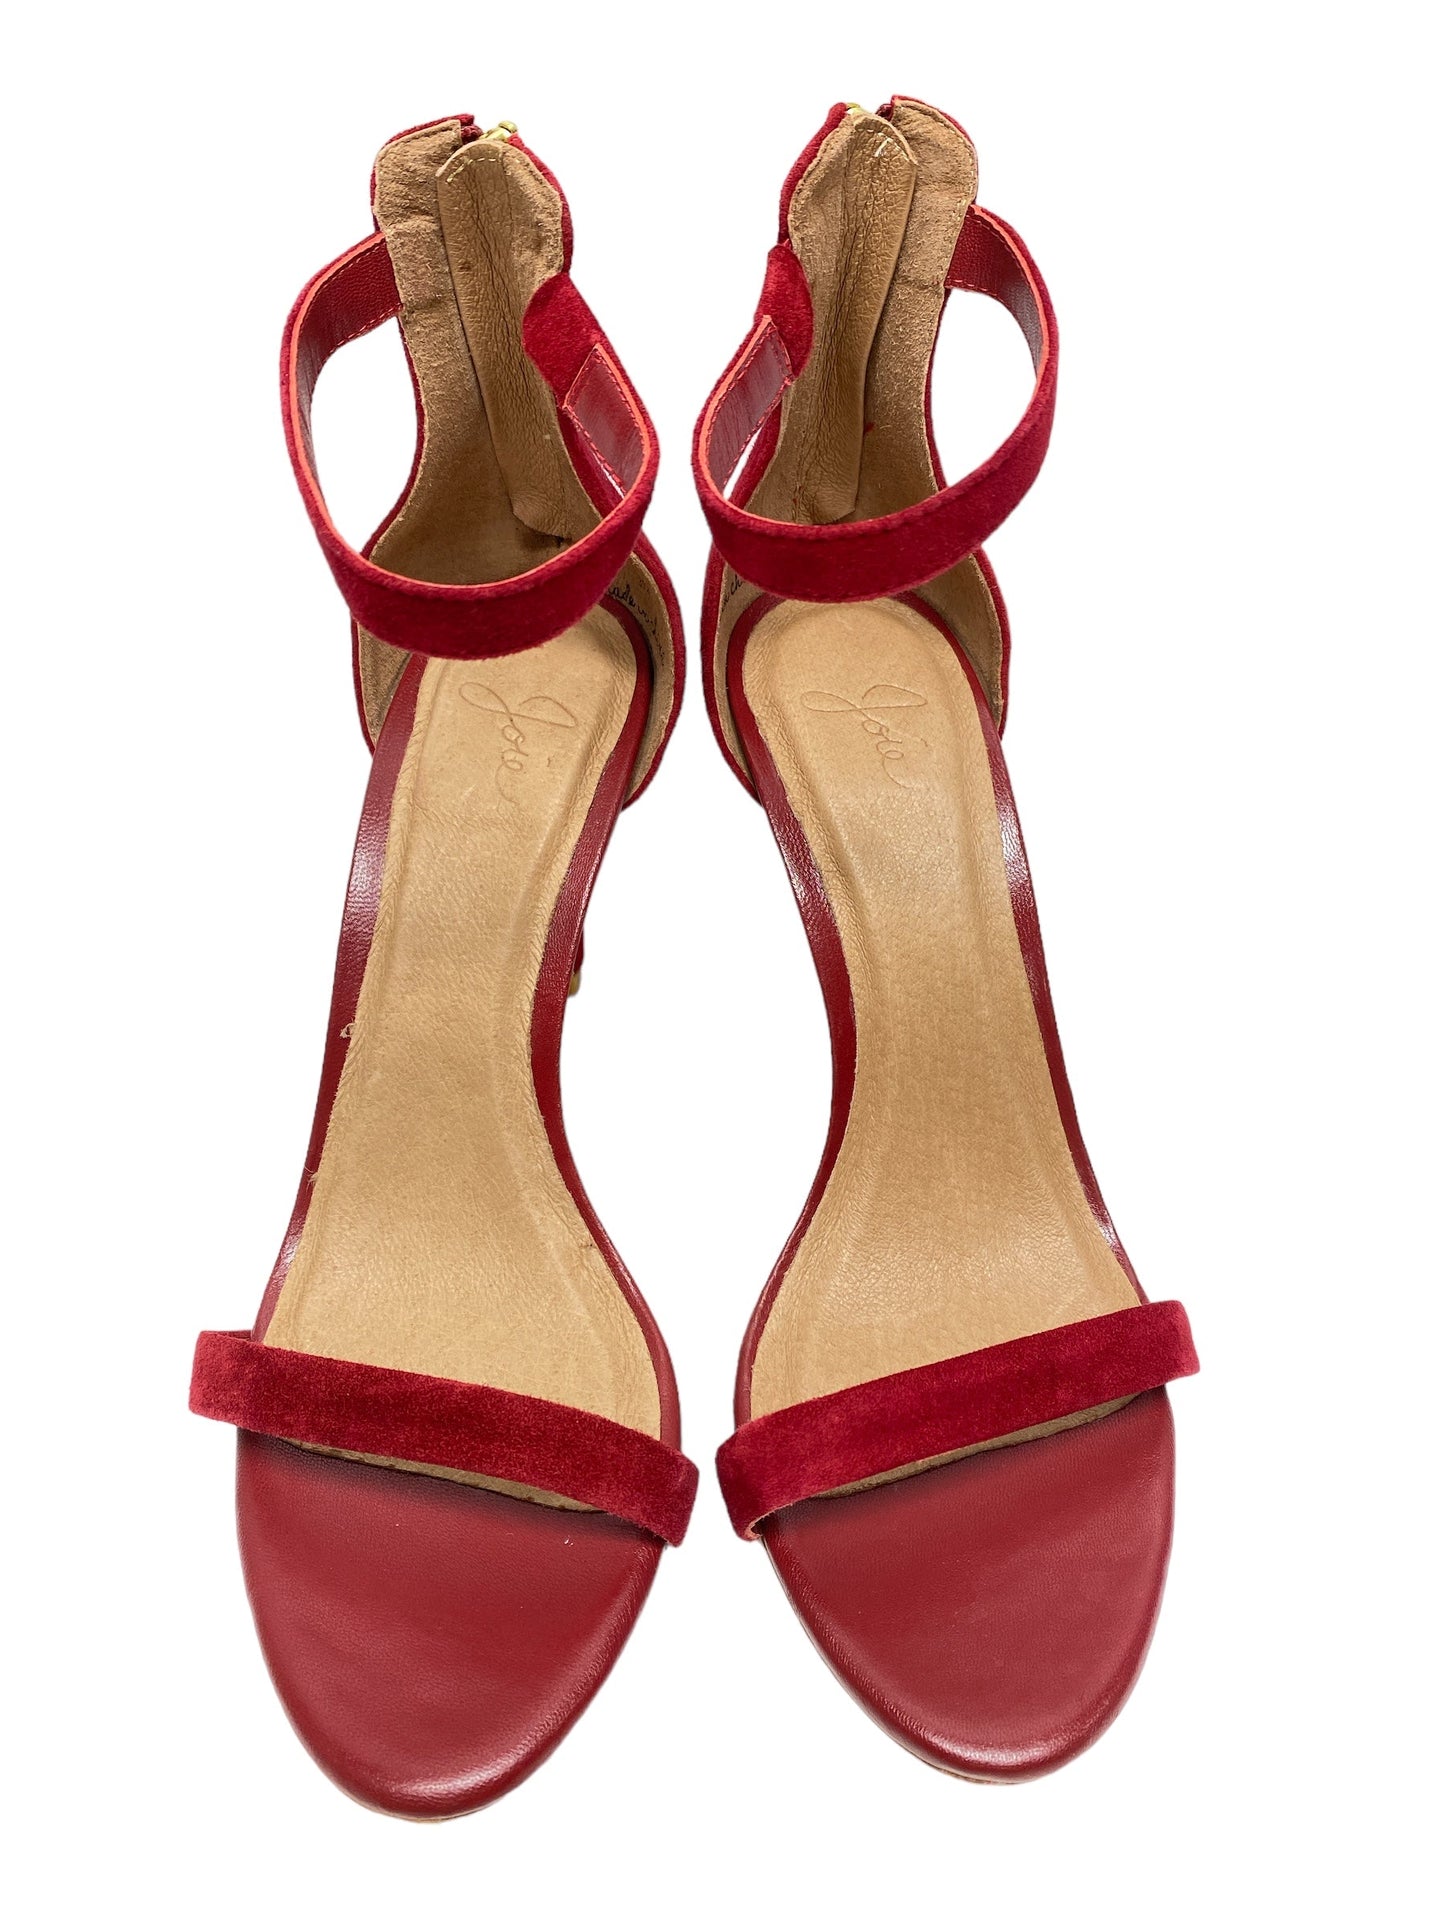 Sandals Heels Stiletto By Joie  Size: 7.5